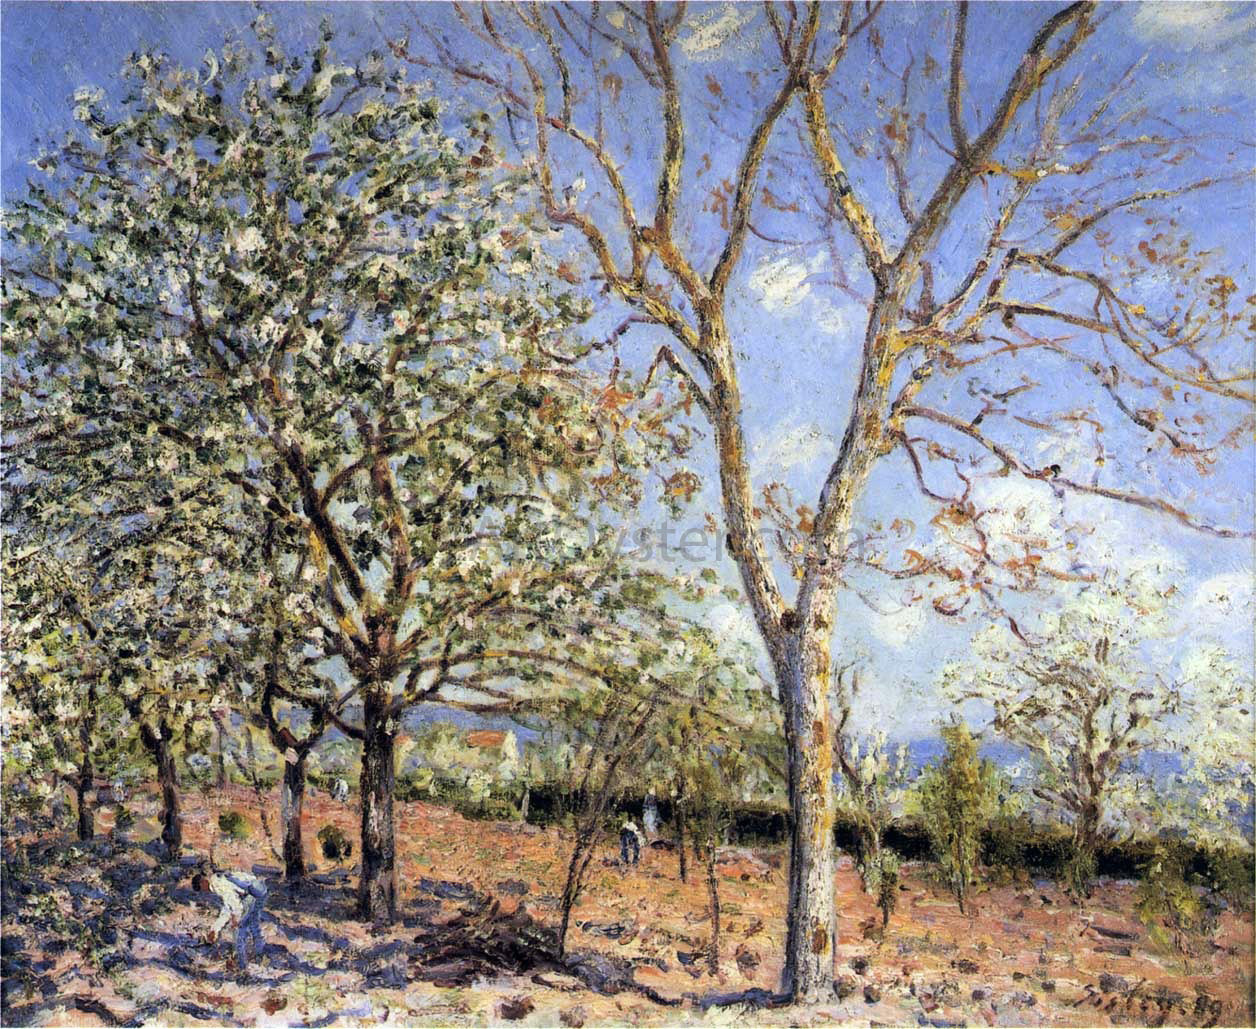  Alfred Sisley Trees in Bloom - Hand Painted Oil Painting